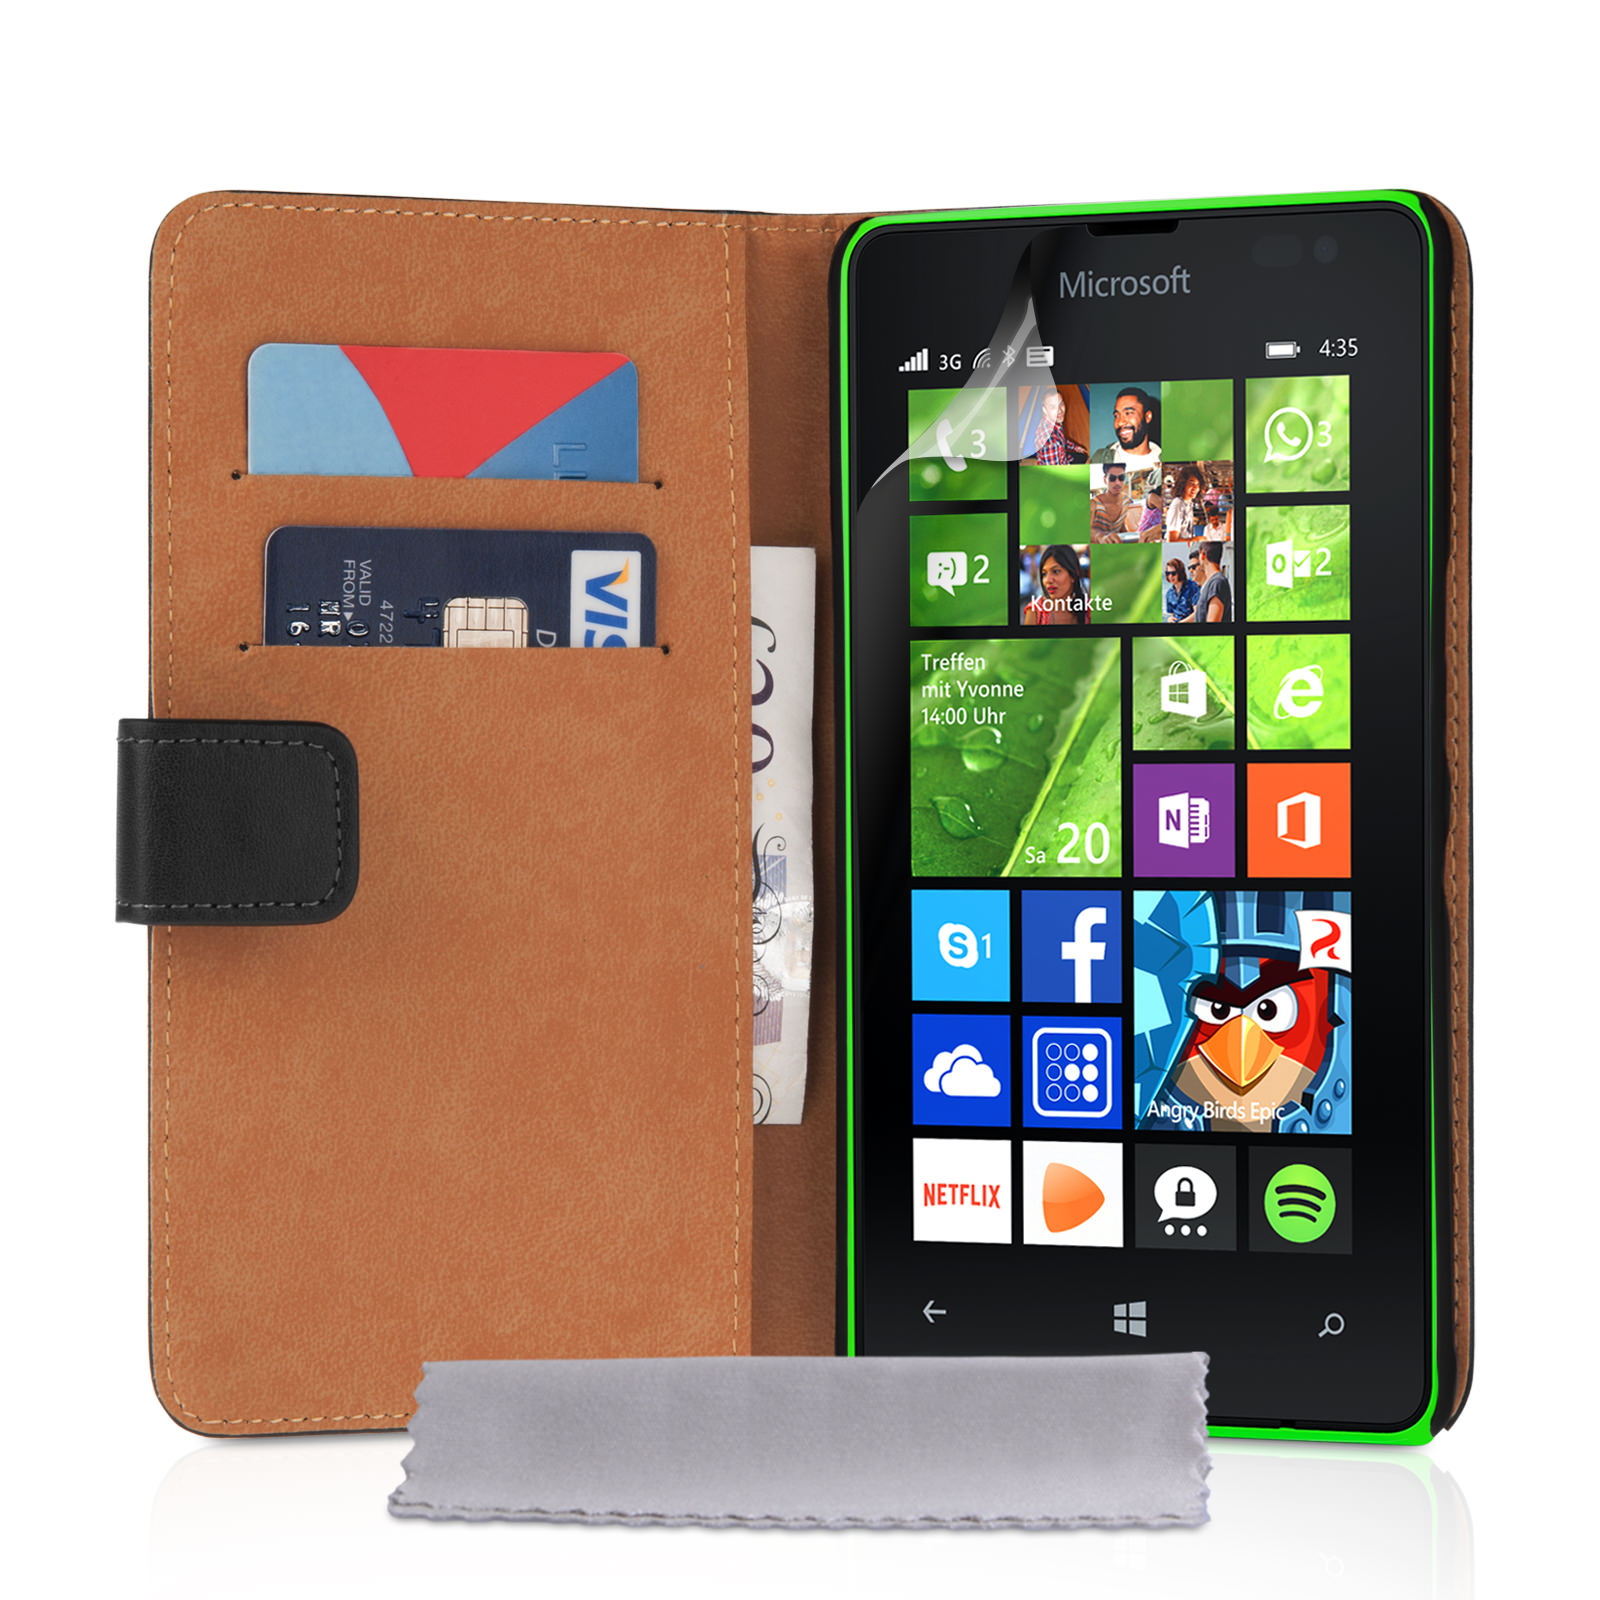 Caseflex Microsoft Lumia 435 Real Leather Wallet Case - Black